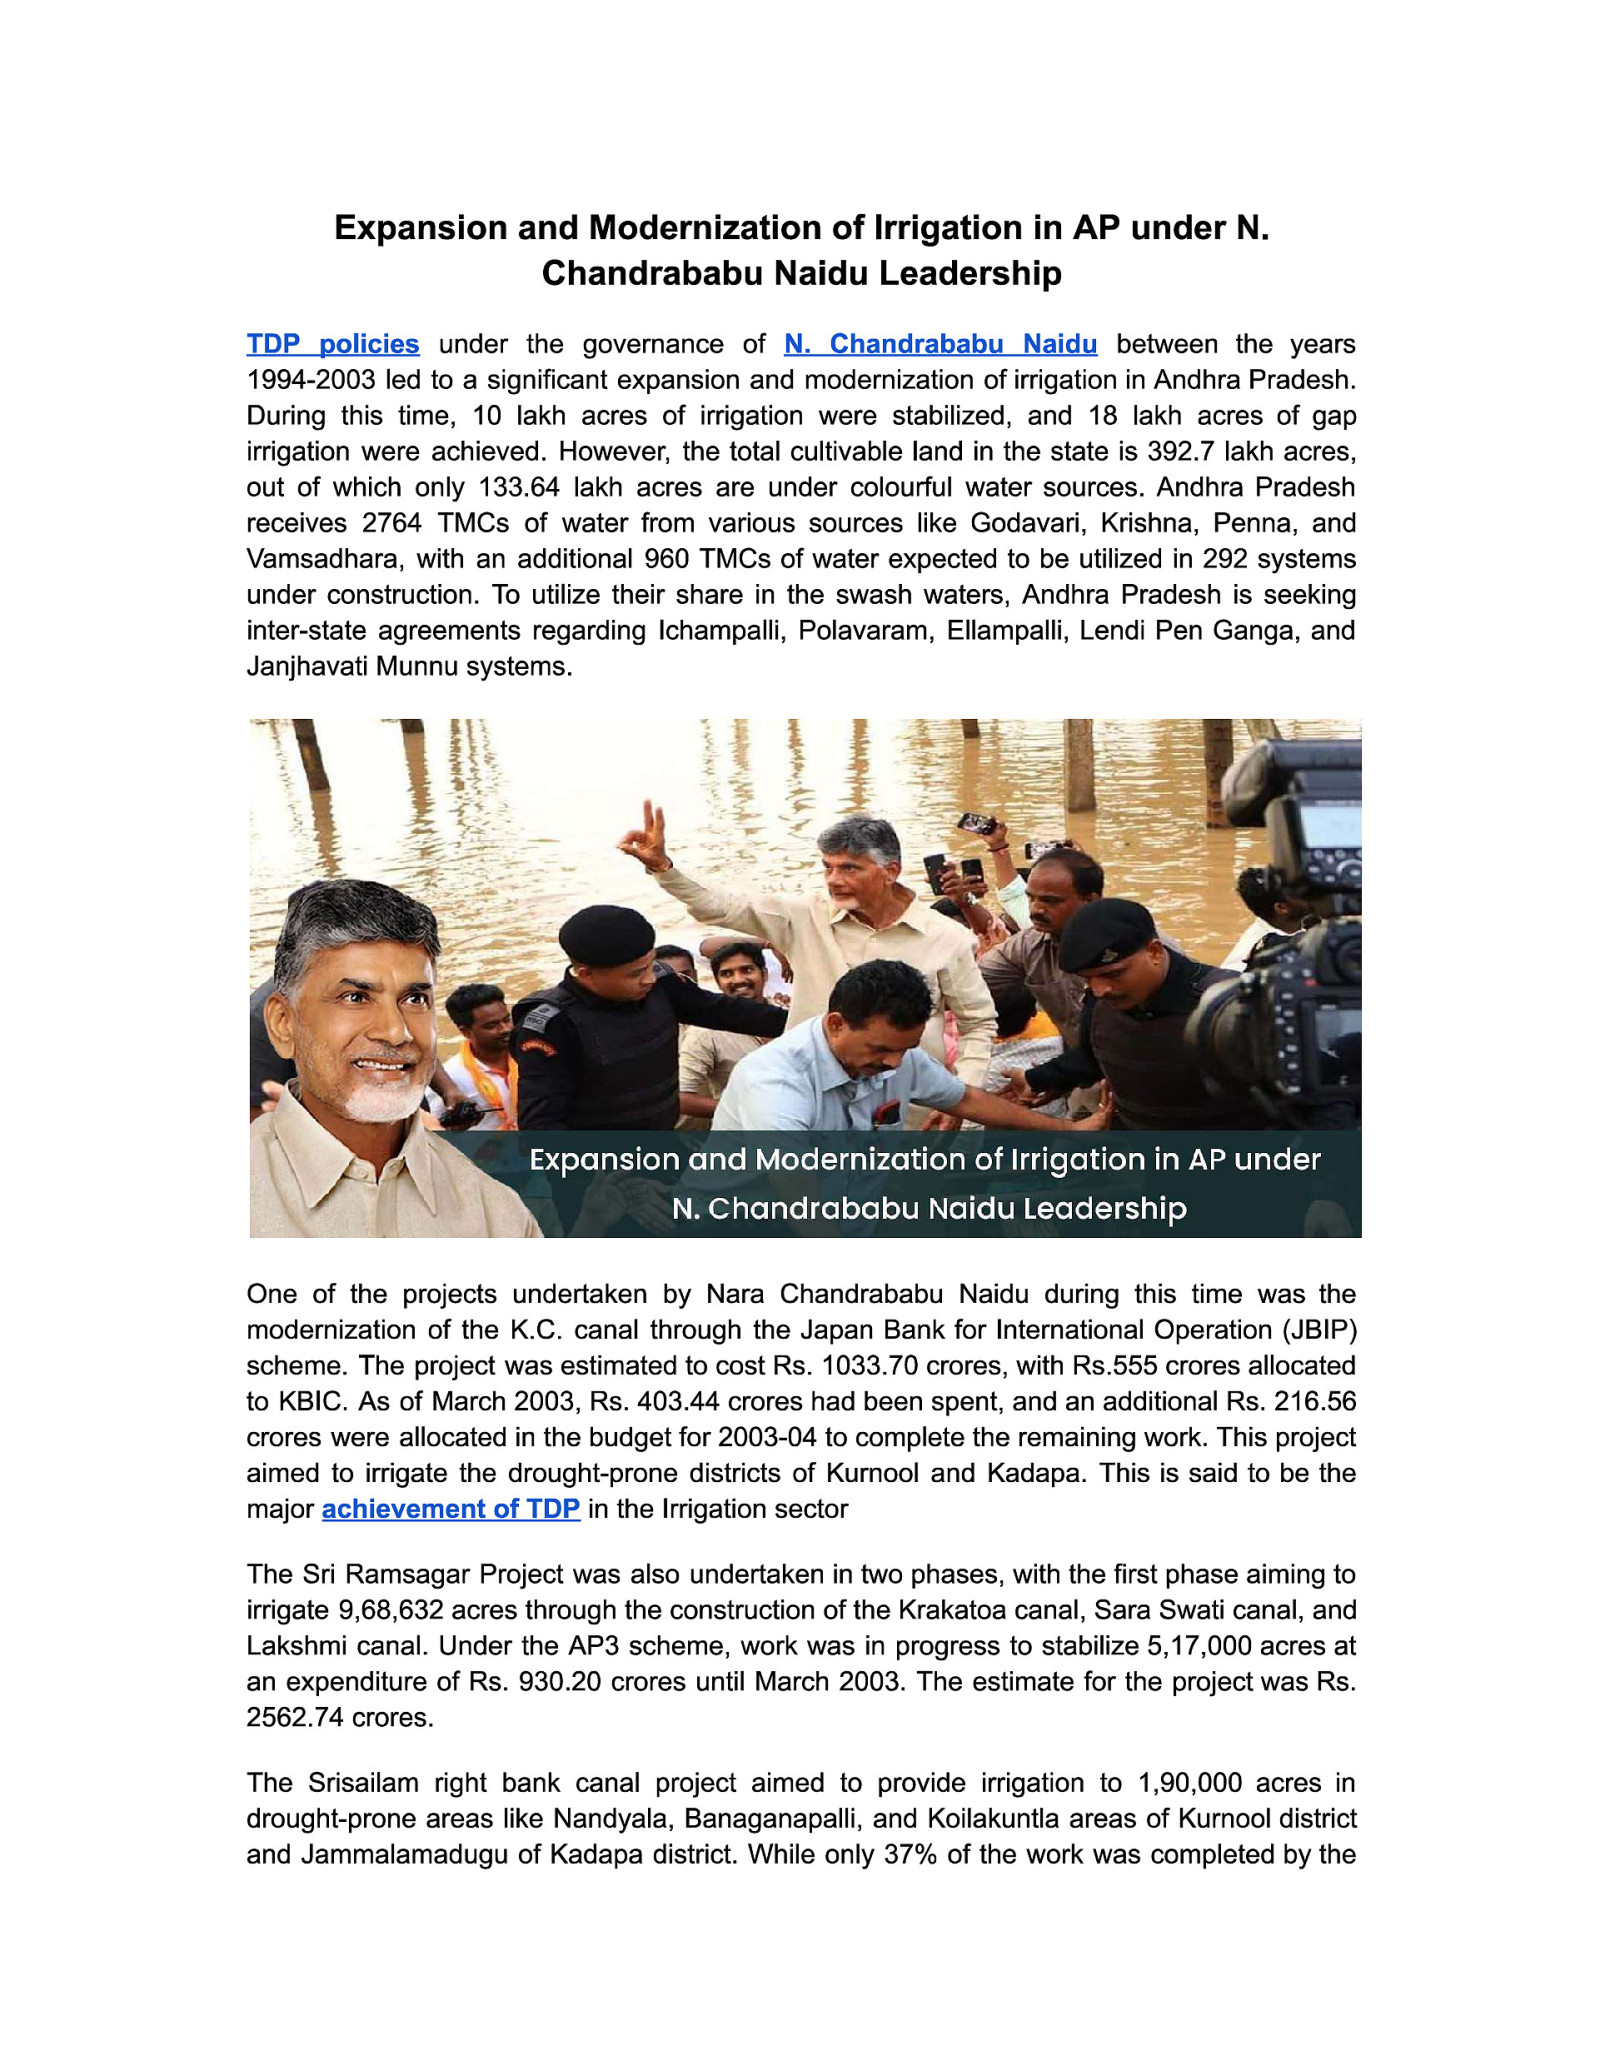 Expansion and Modernization of Irrigation in AP under N. Chandrababu Naidu Leadership